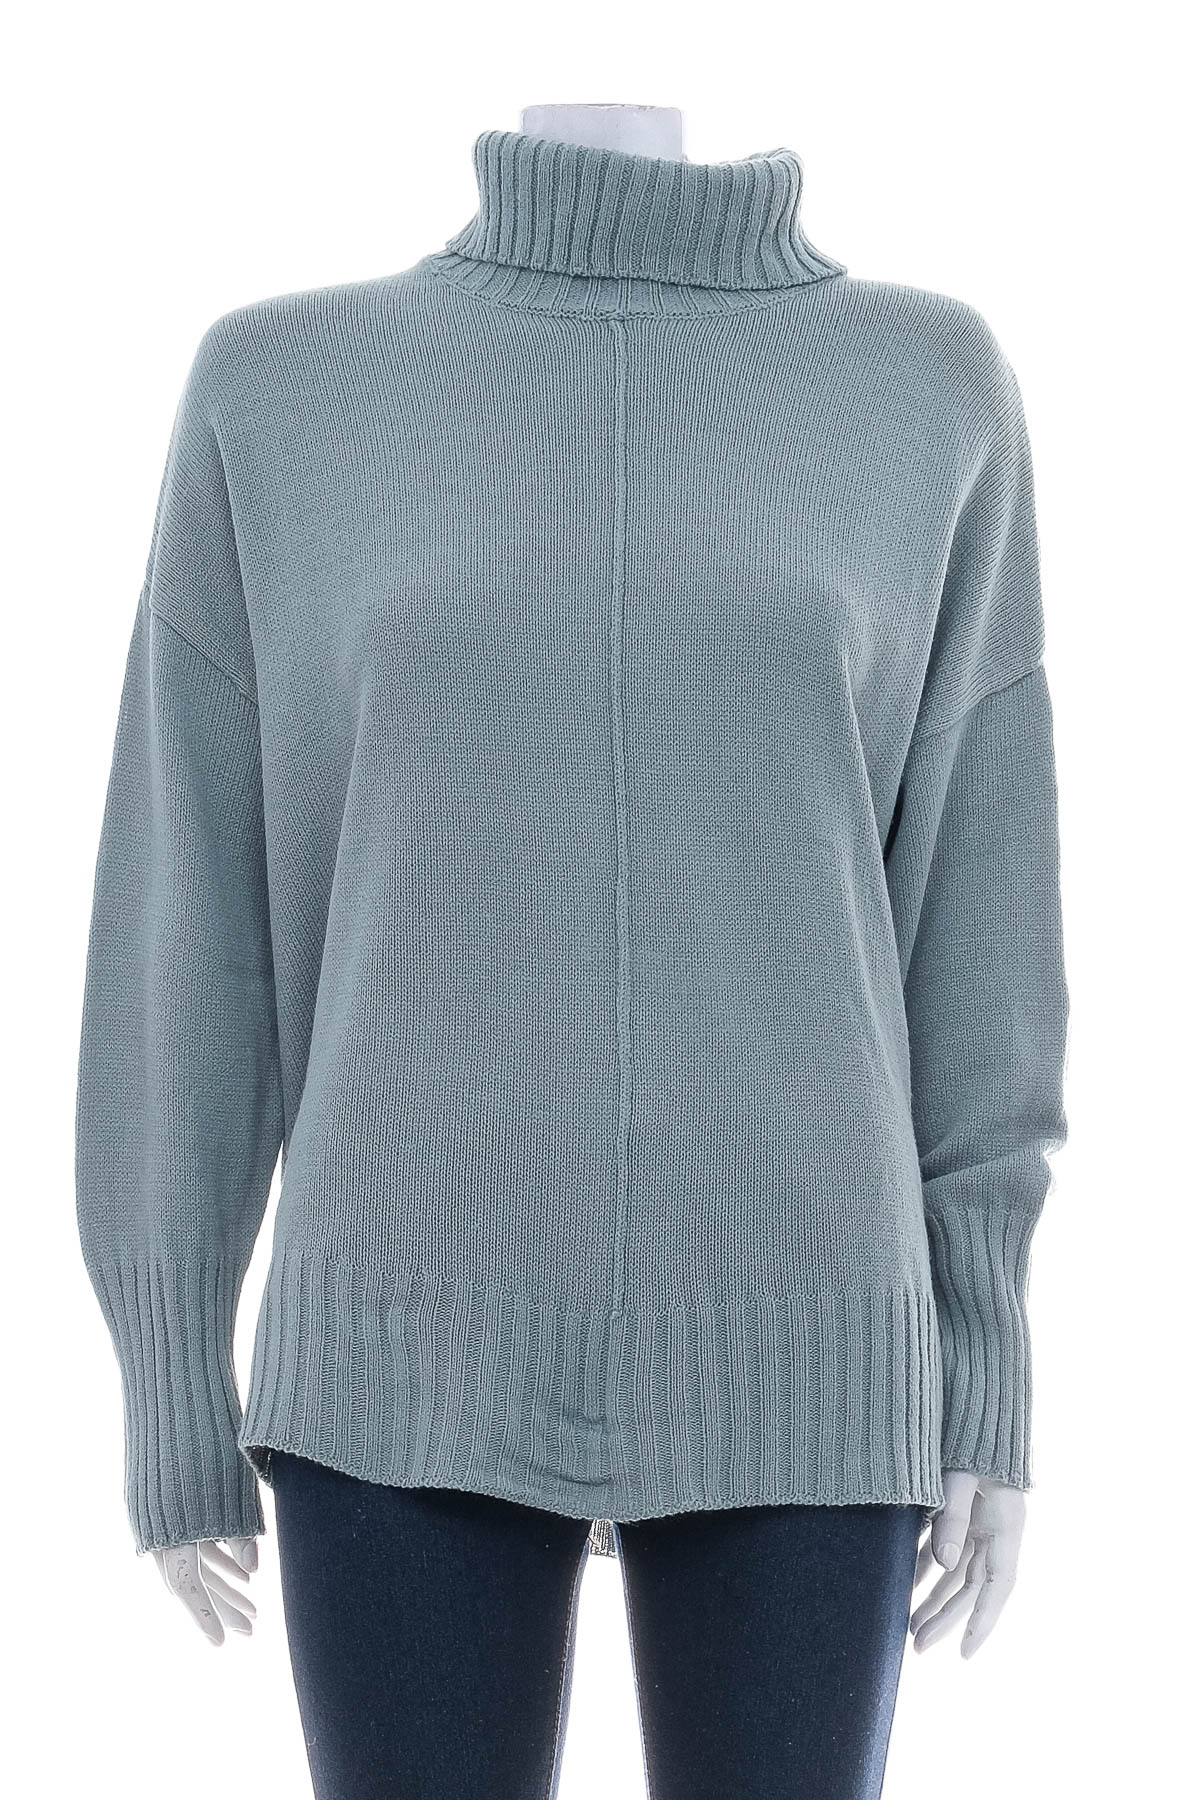 Women's sweater - Rick Cardona - 0